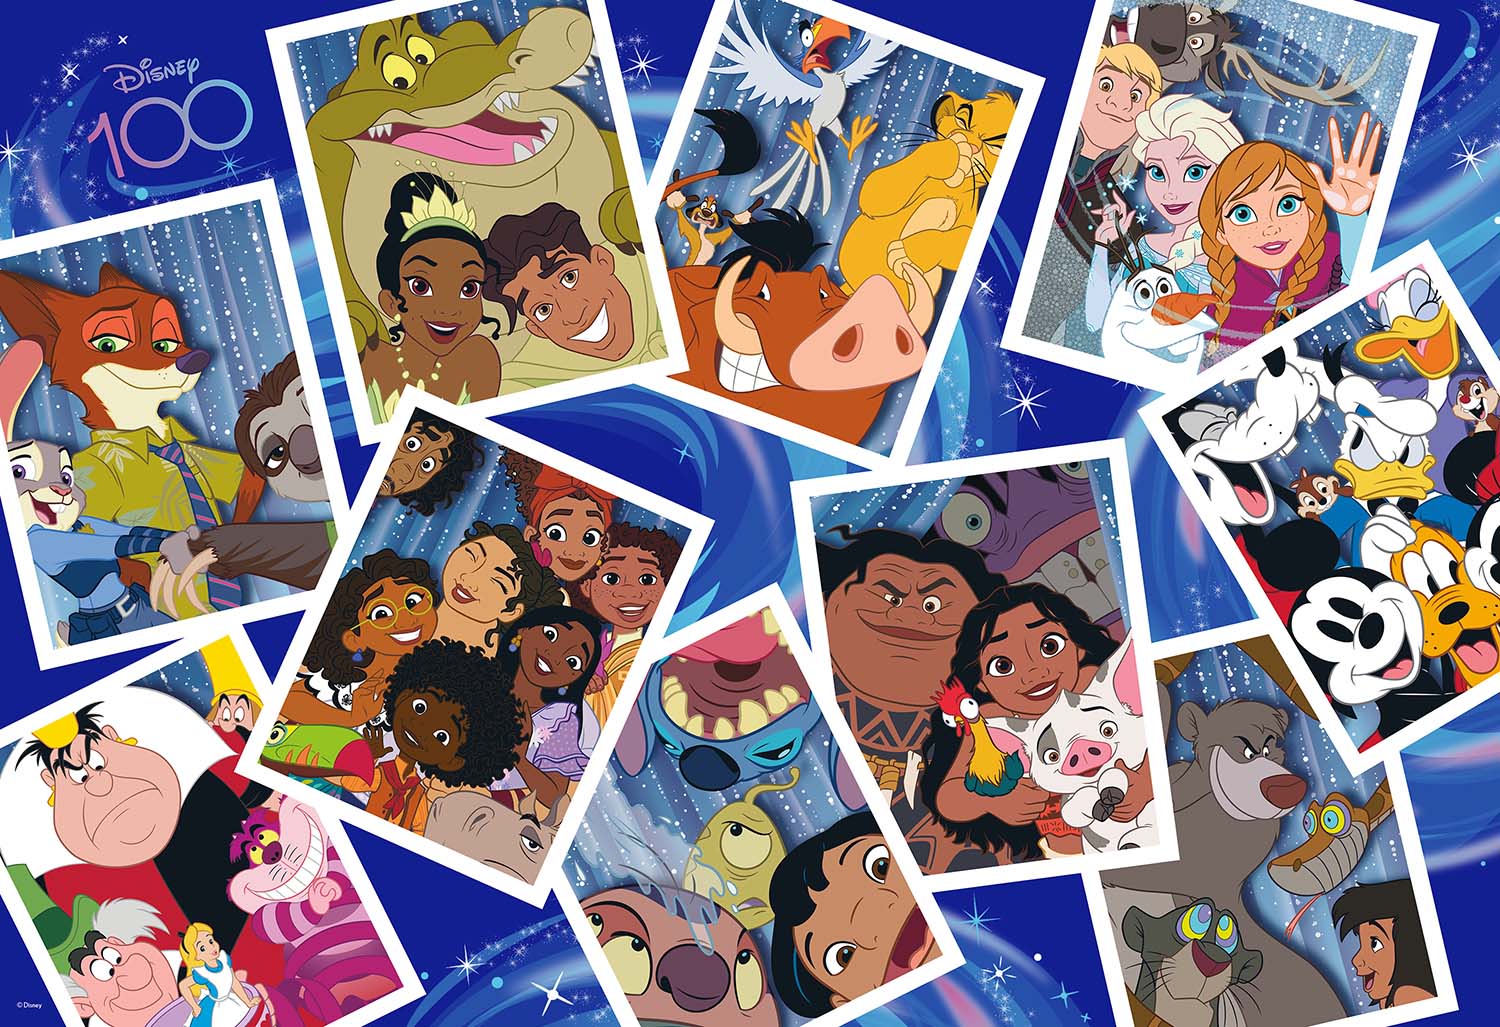 Disney / PIXAR - Movie Posters - 2000 Piece Puzzle